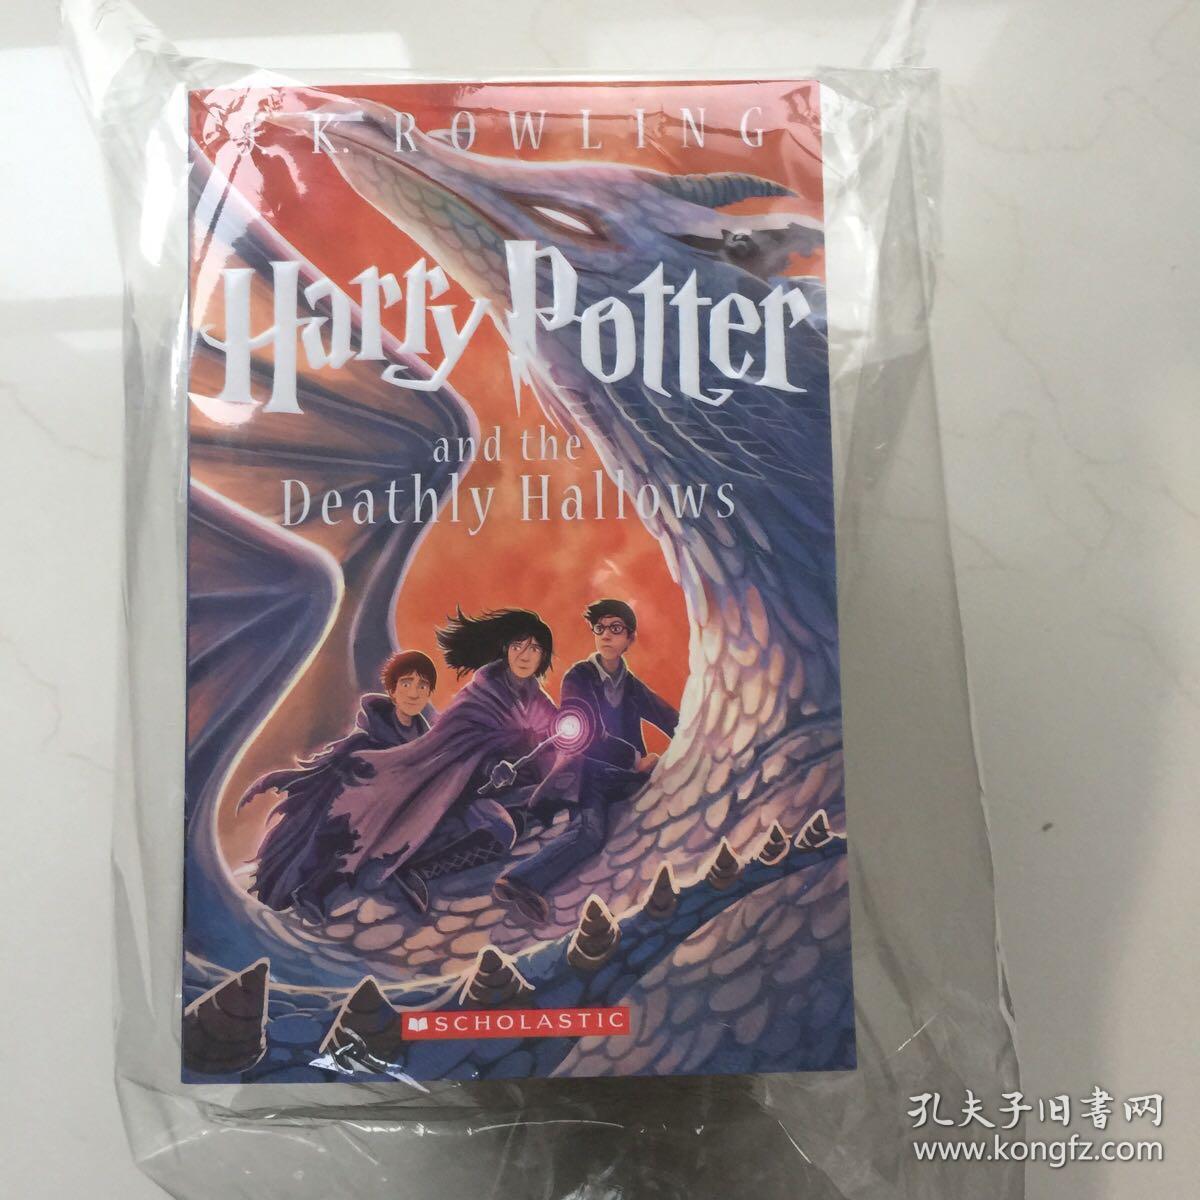 英文原版  Harry Potter and the Sorcerer's Stone  哈利波特套装  美版  1-7册